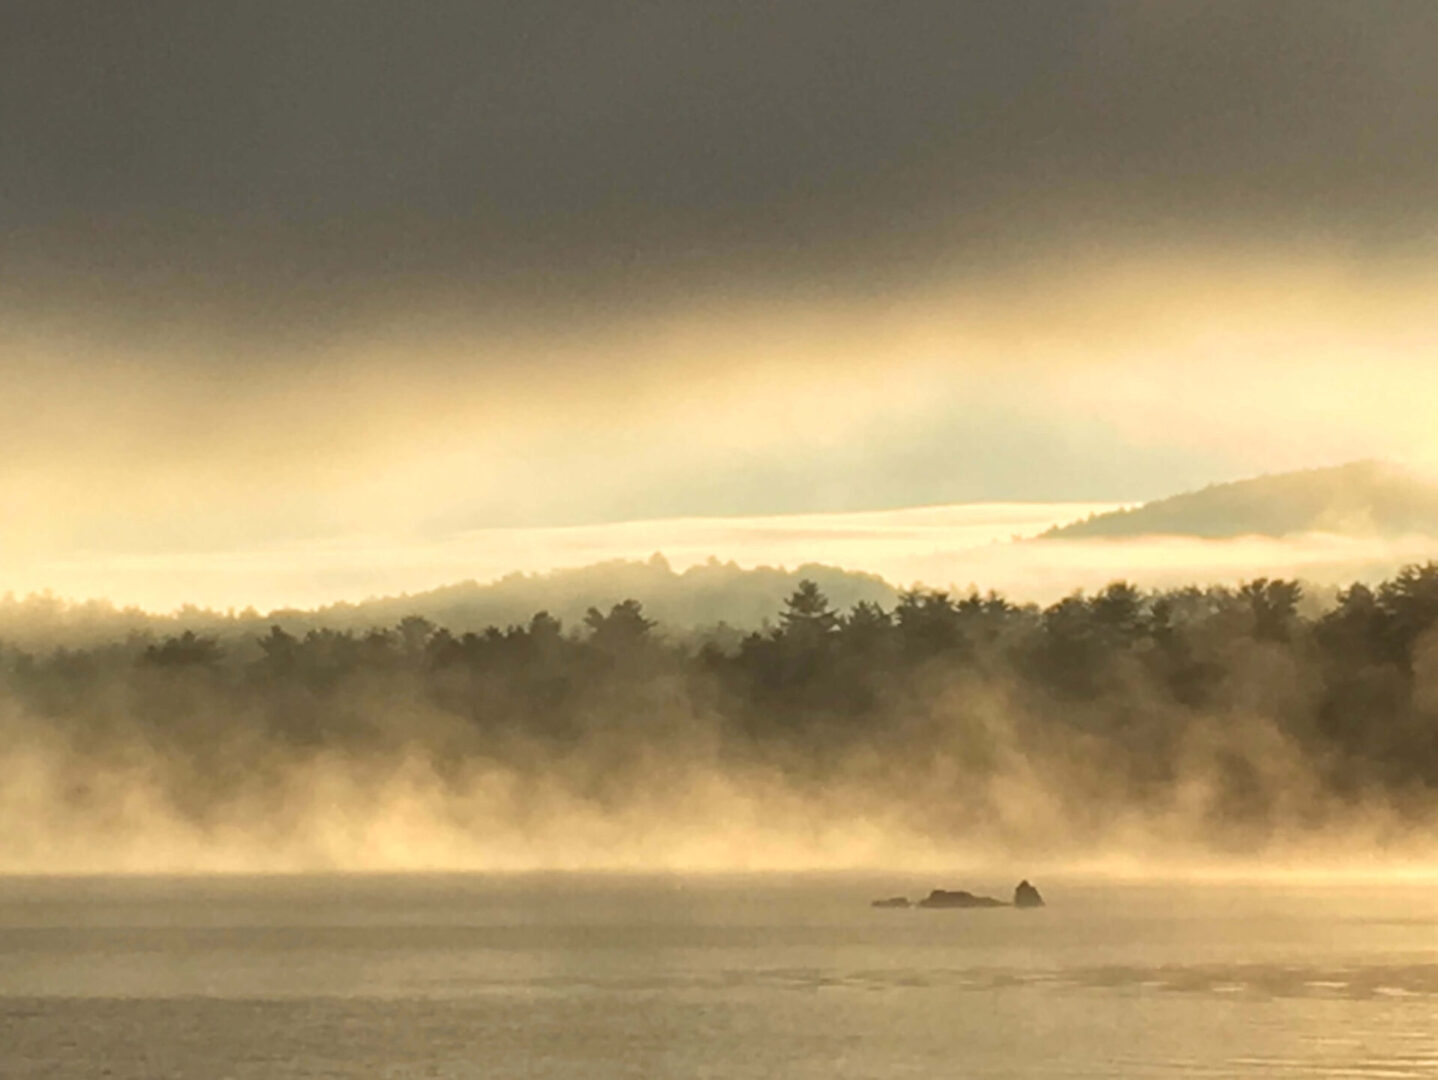 Early morning, Autumn sun on a misty lake